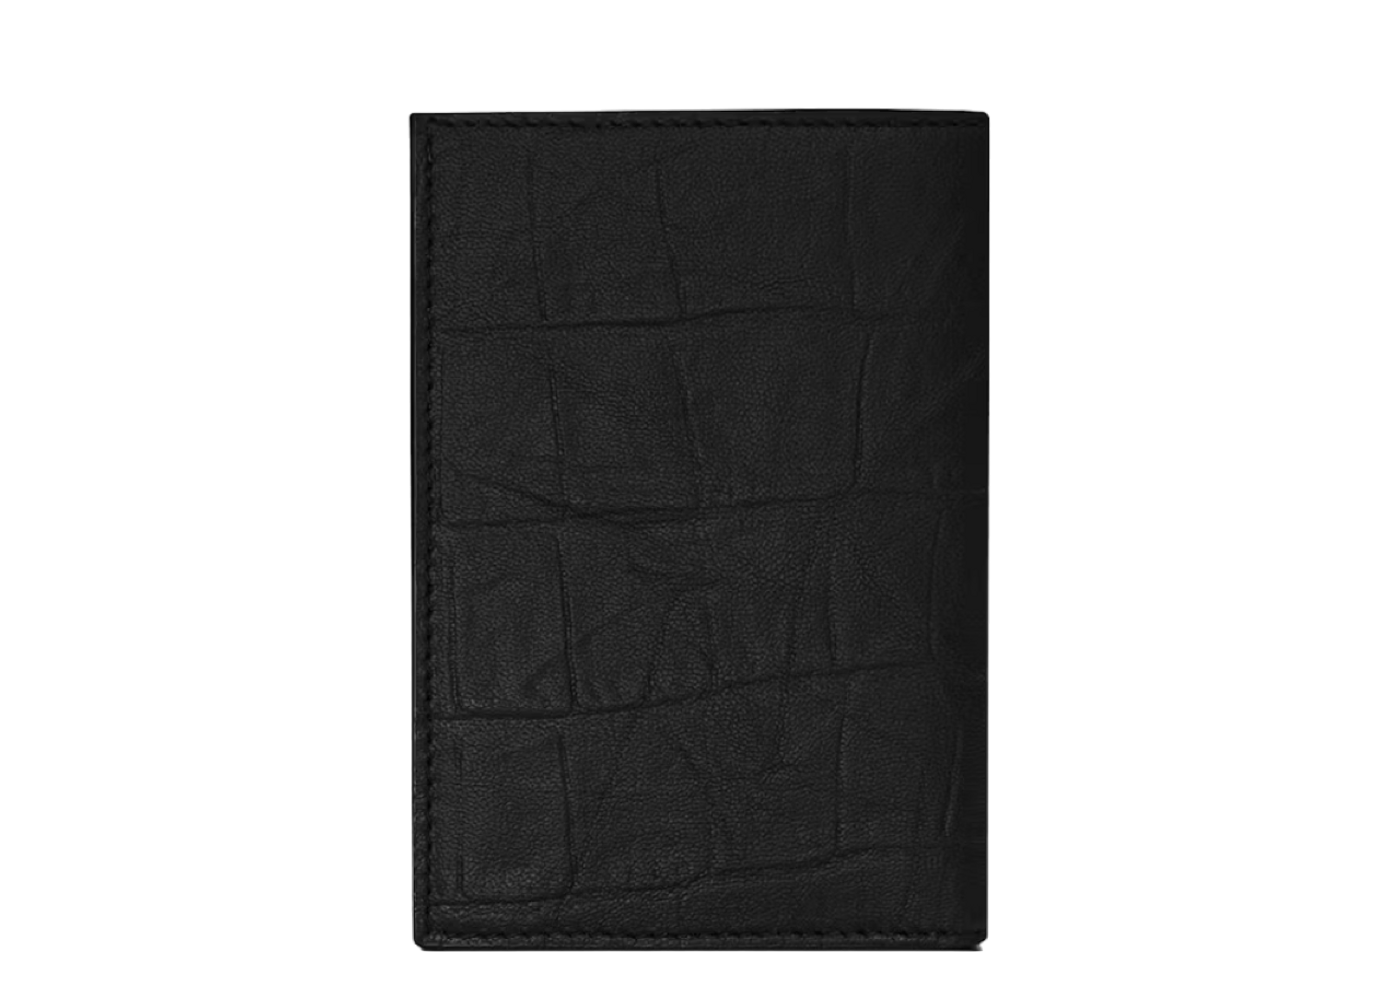 Saint Laurent Crocodile Embossed Matte Leather Monogram Wallet in Black